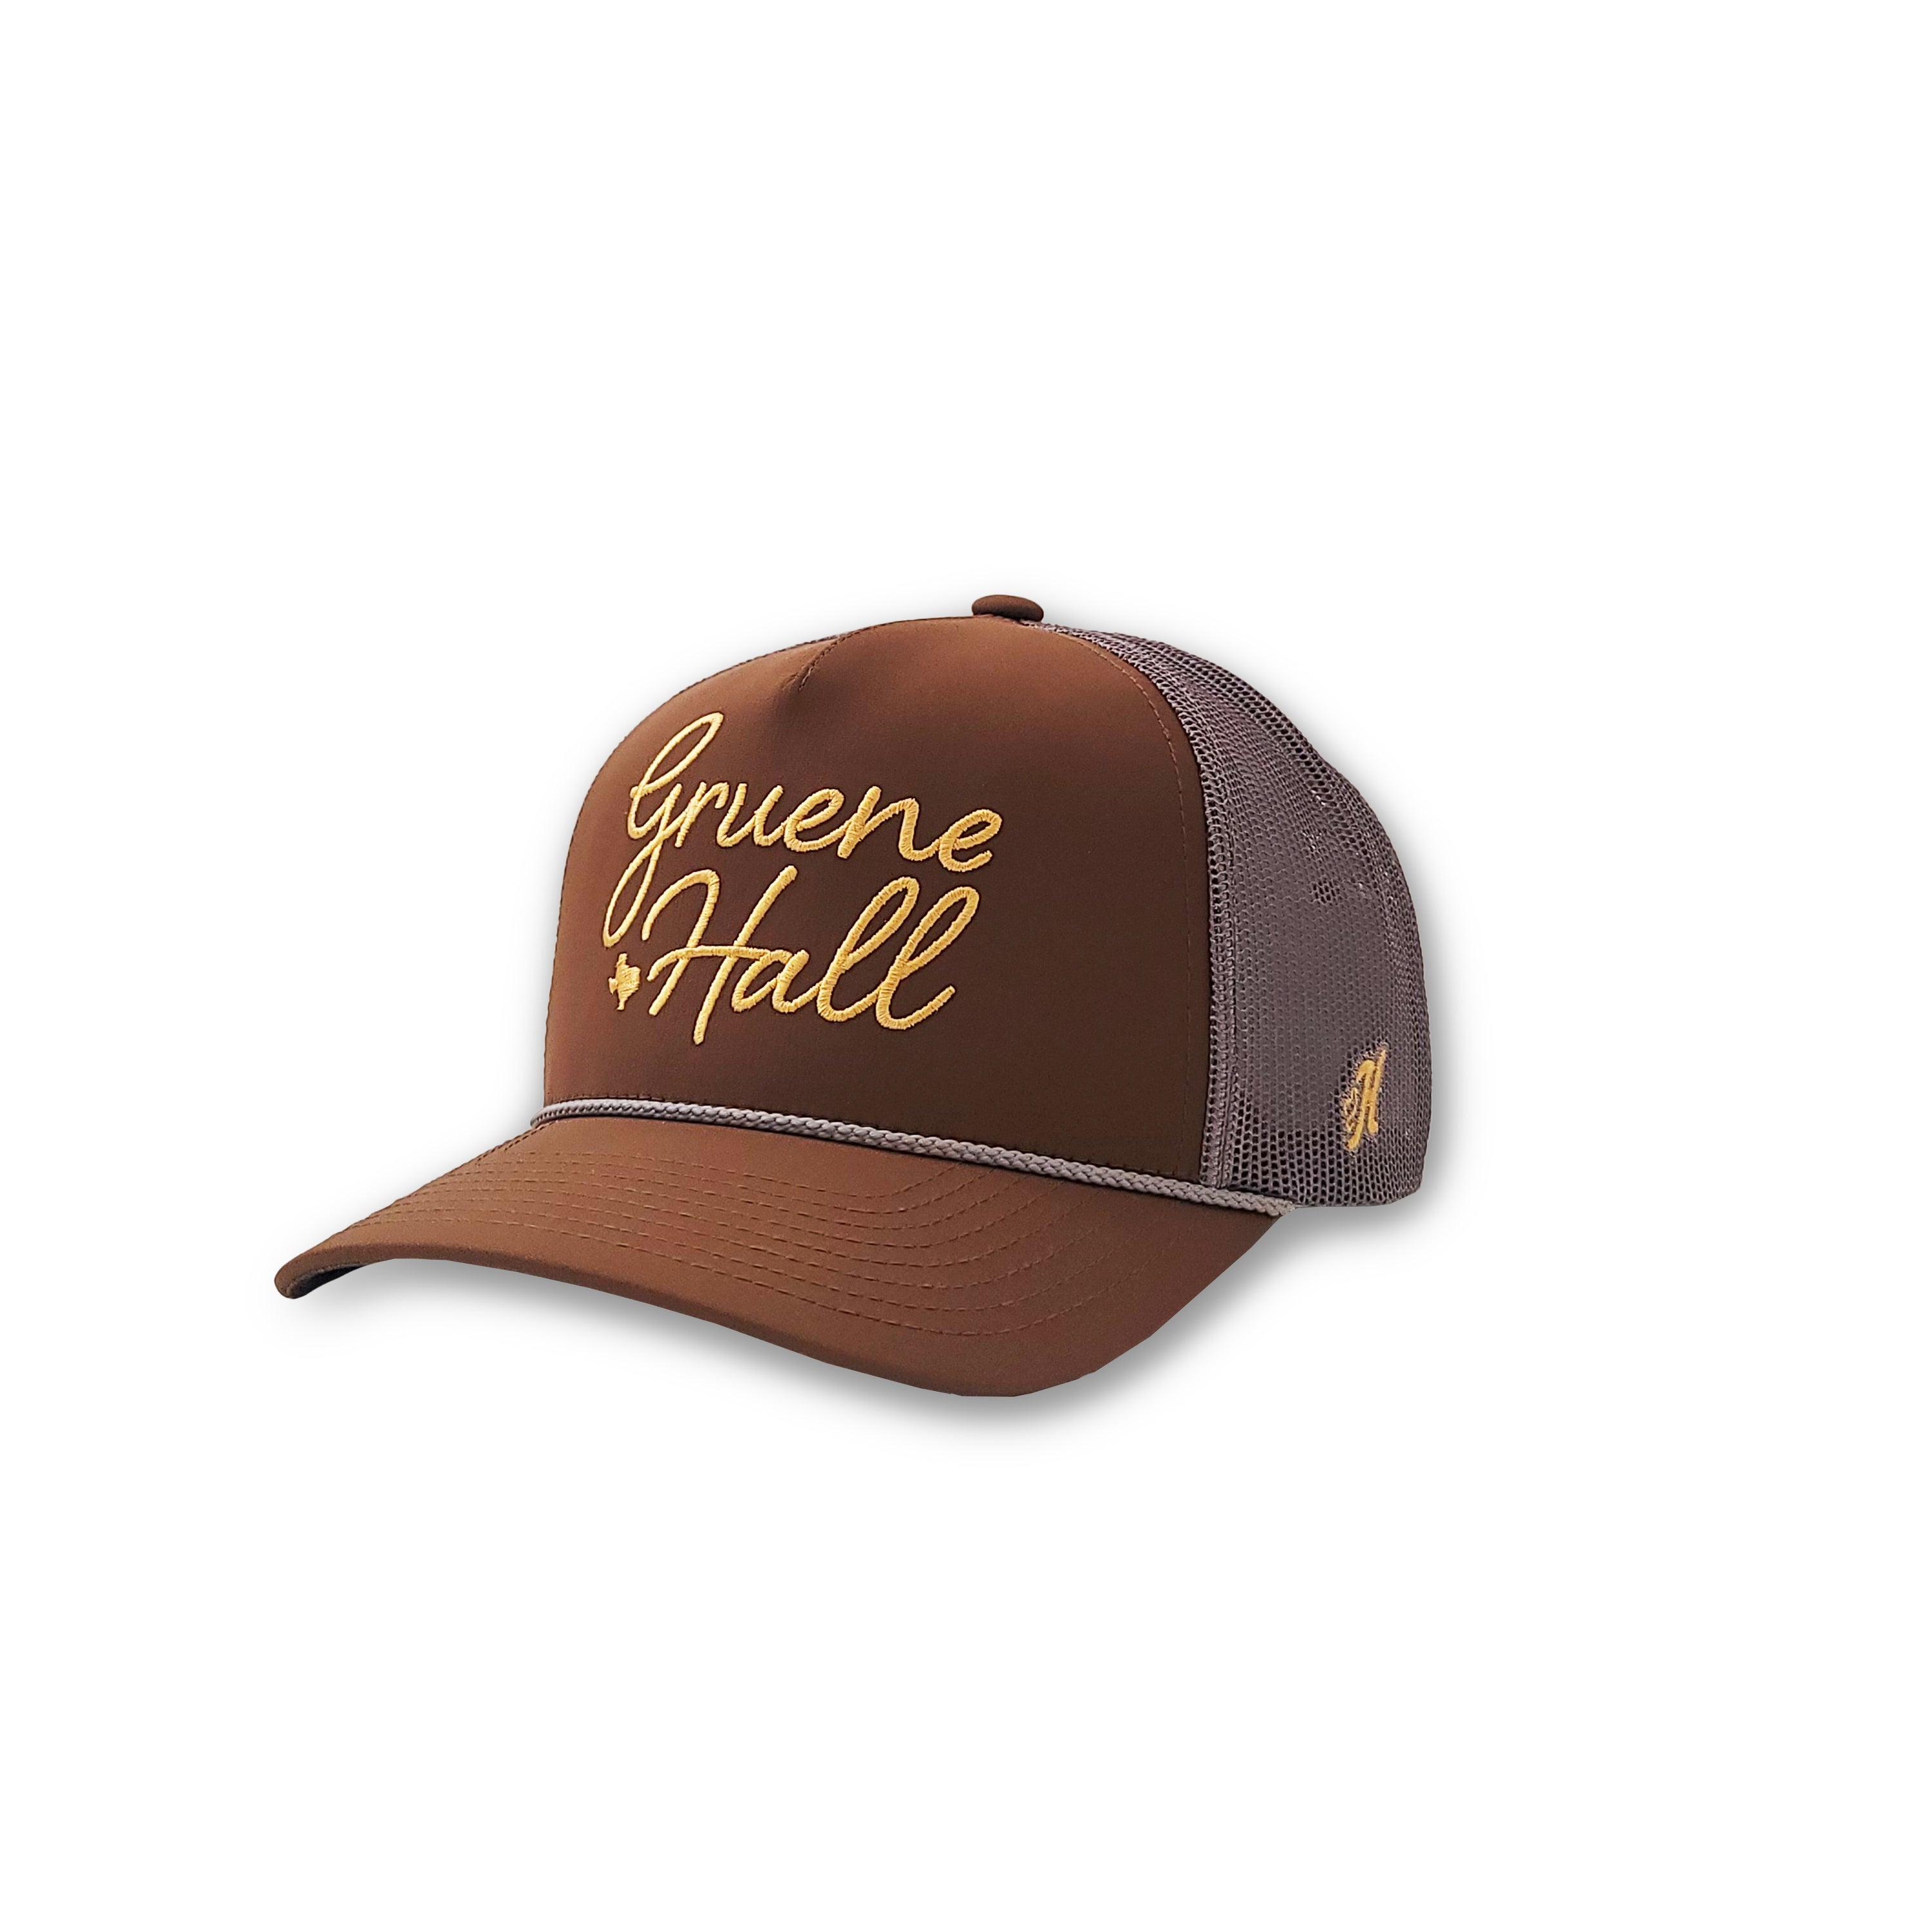 Hooey x Gruene Hall Stitched Trucker Cap  #2387T-BRN/GRY